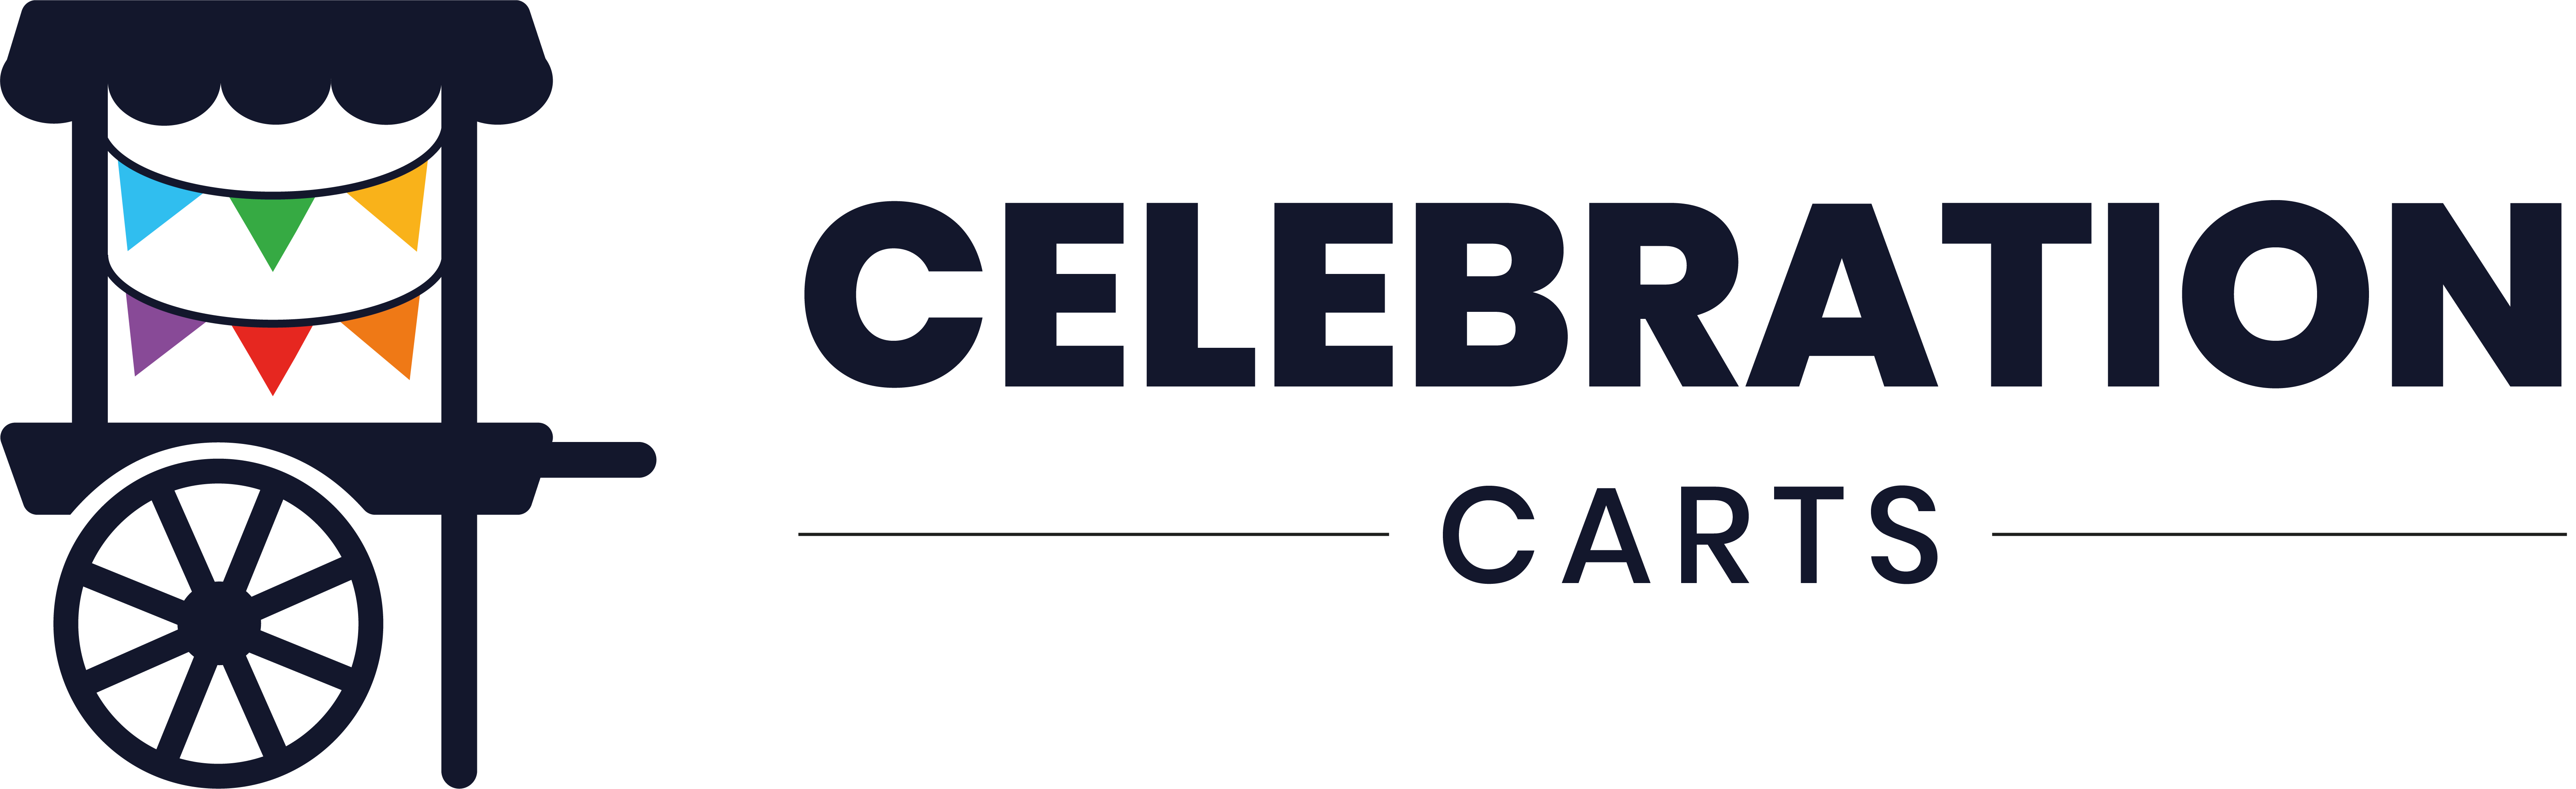 Celebration Carts - Logo Consultancy